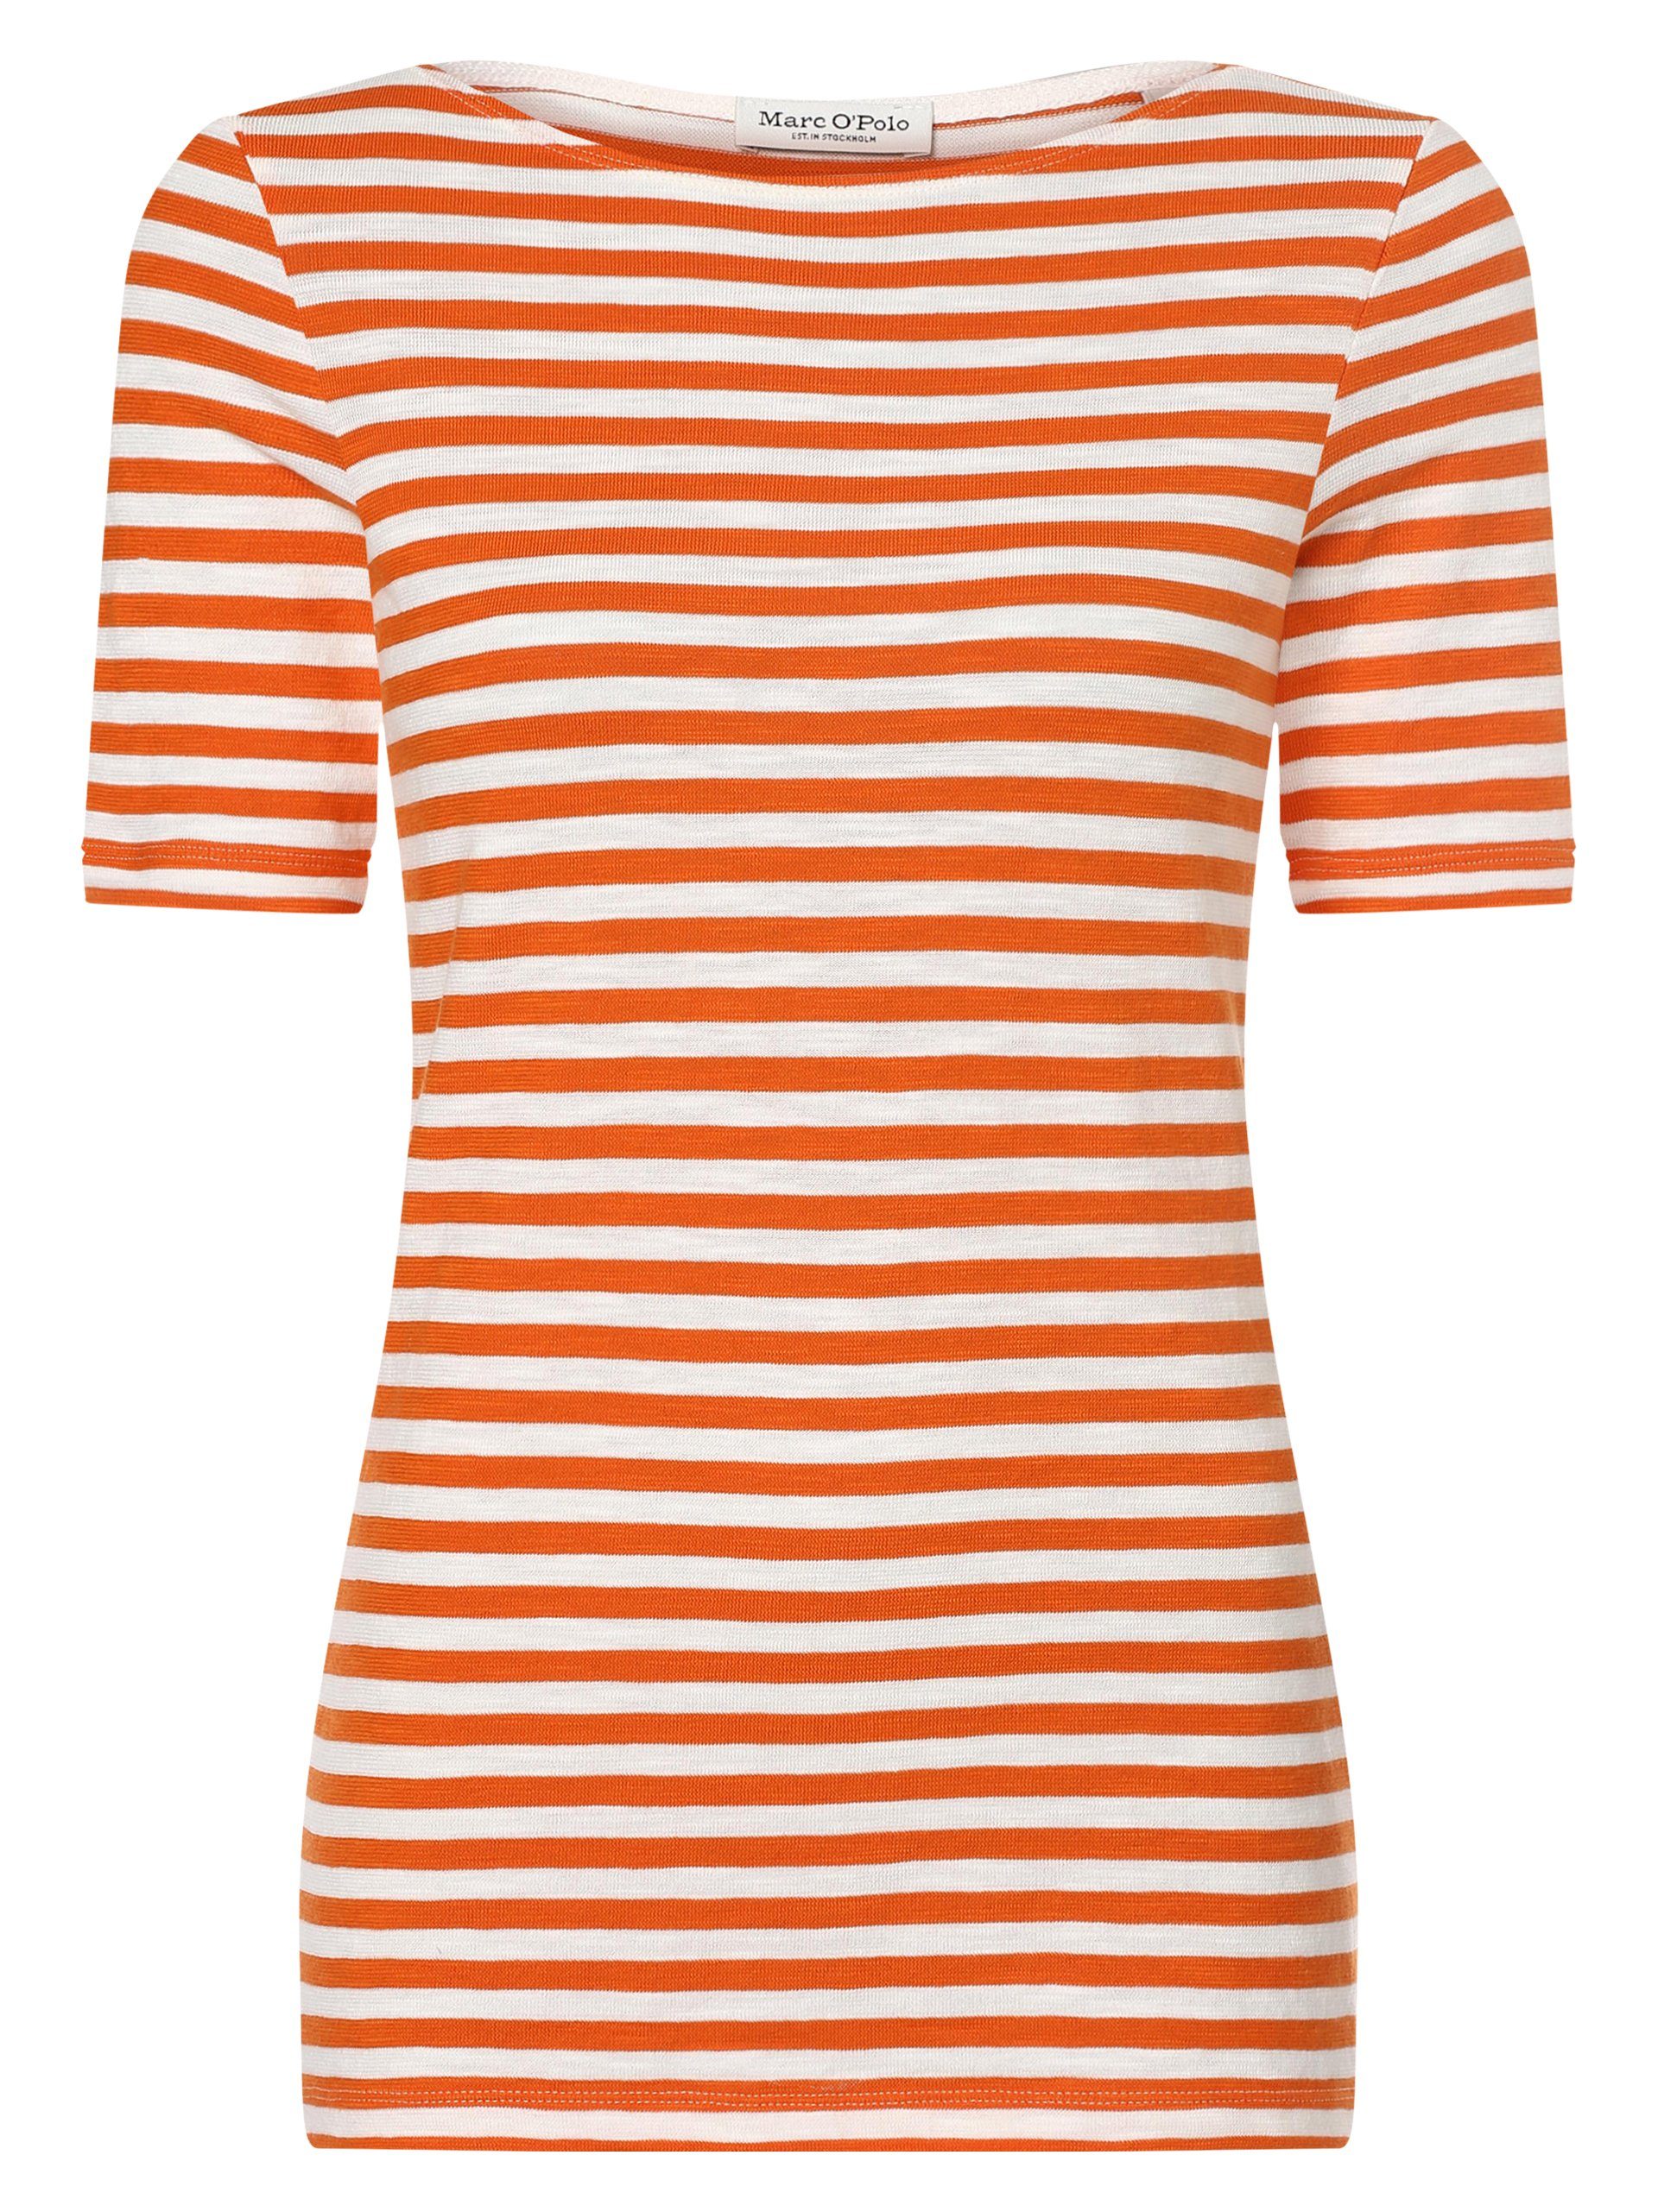 Marc O'Polo T-Shirt orange weiß